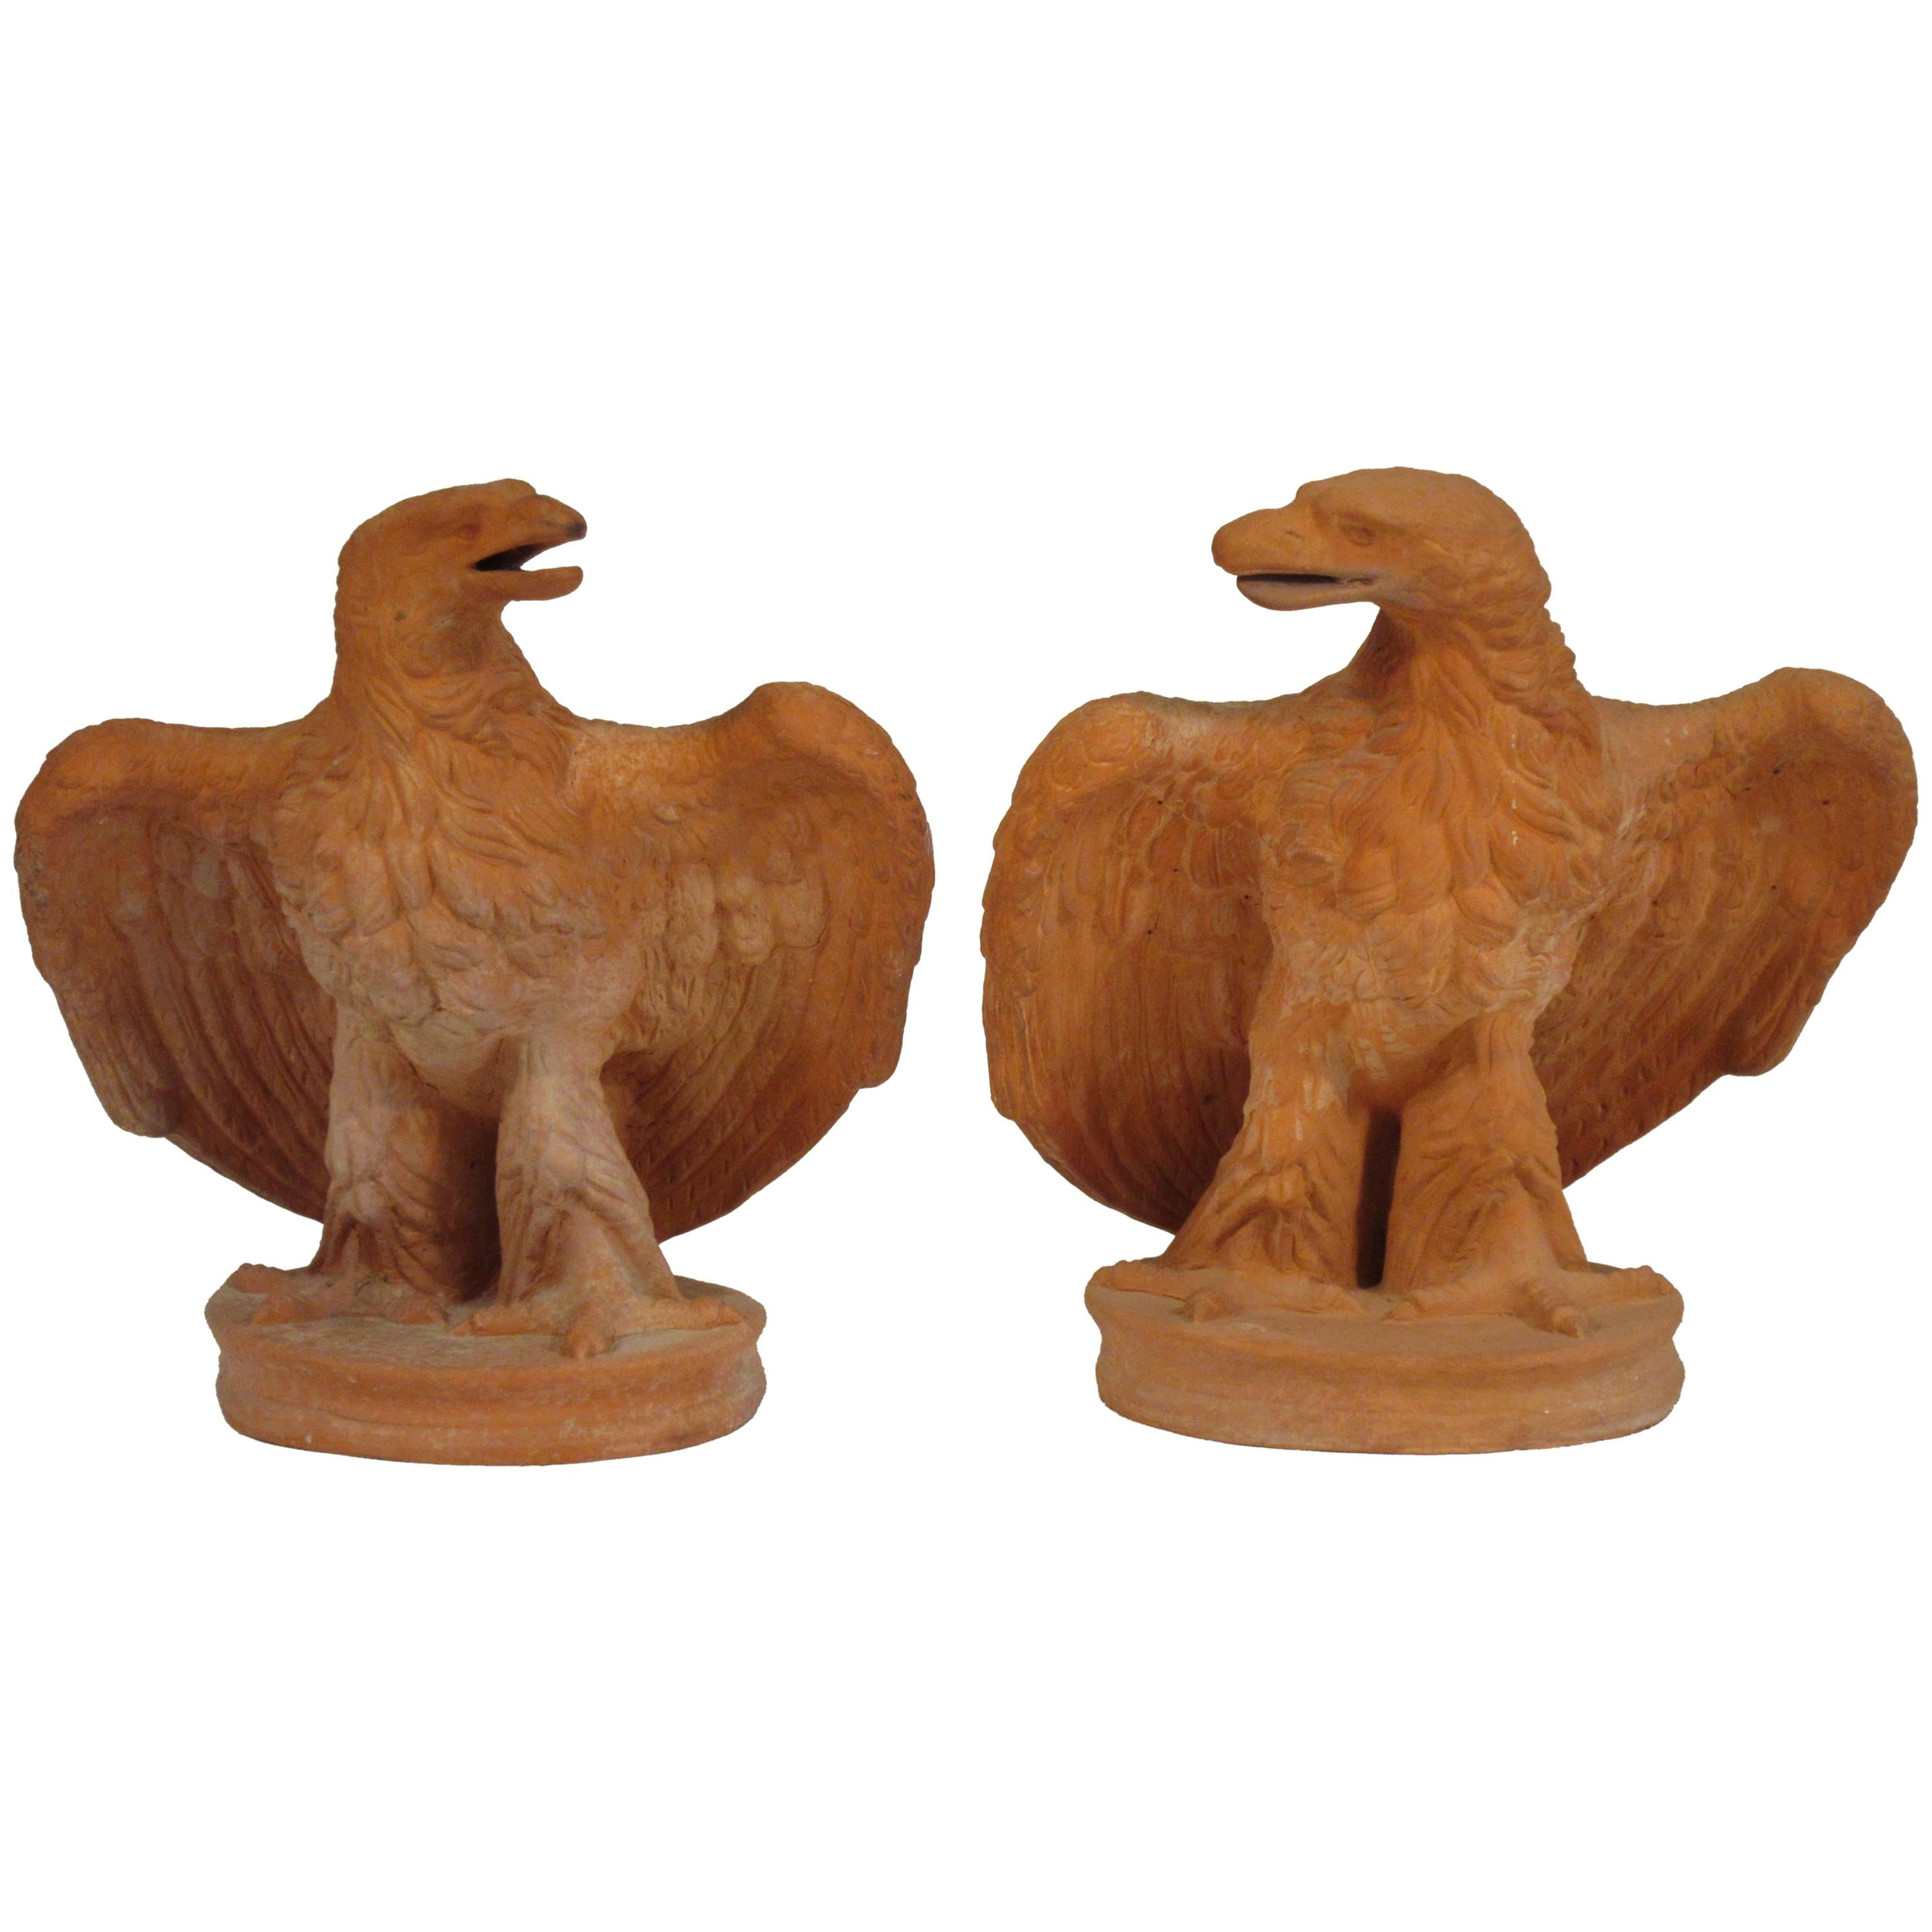 Pair of Italian Terra Cotta Life-Size Eagles